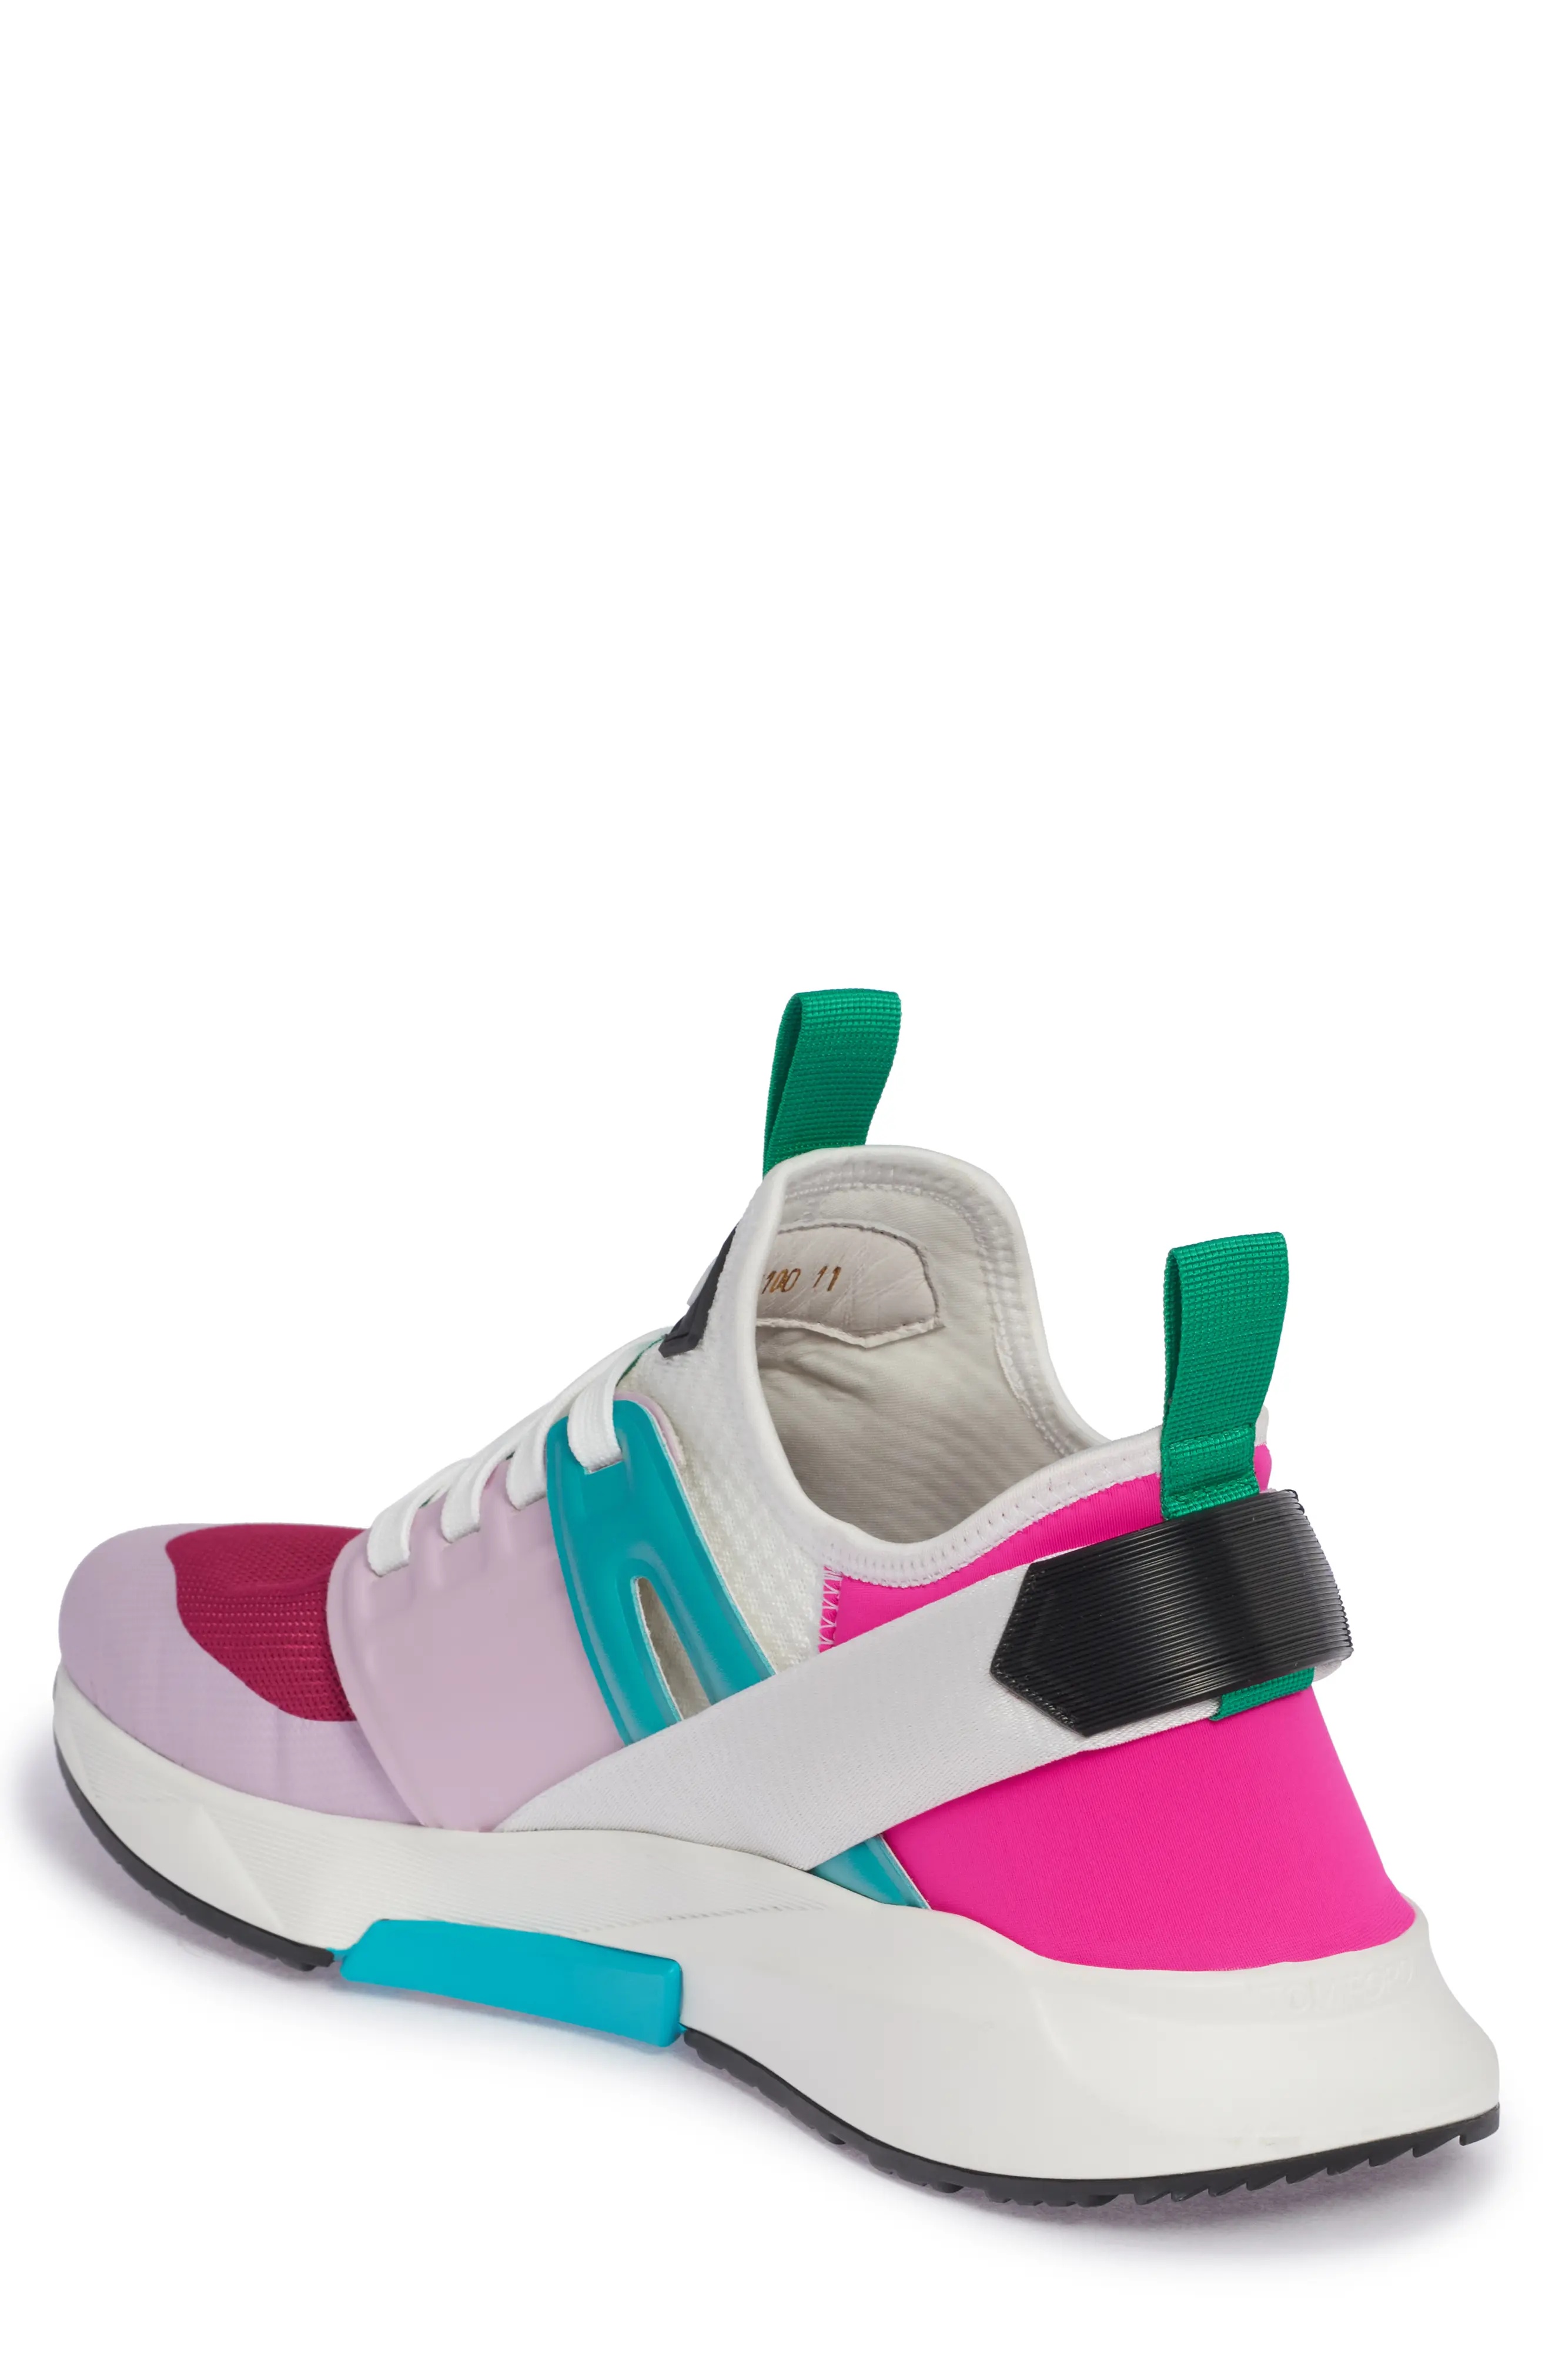 Jago Mixed Media Sneaker in Fuchsia/Pink/White - 2